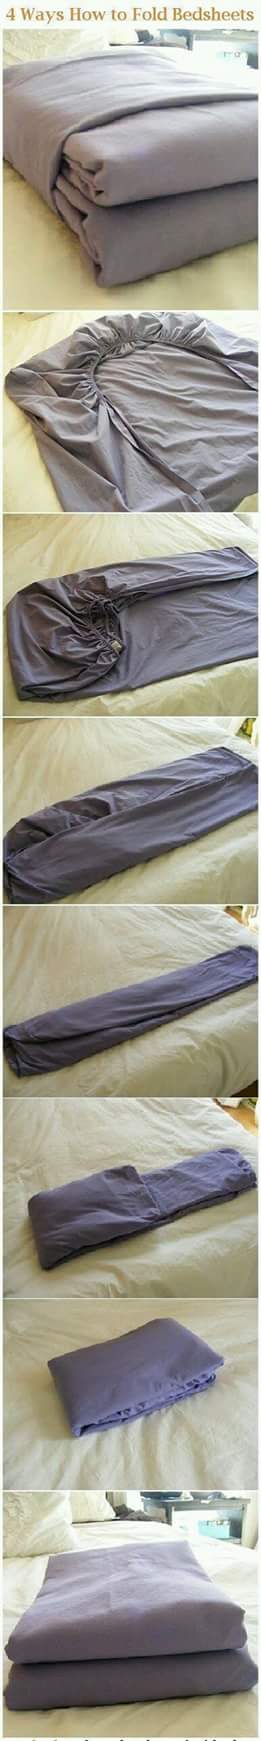 bedding konmari - 4 Ways How to Fold Bedsheets